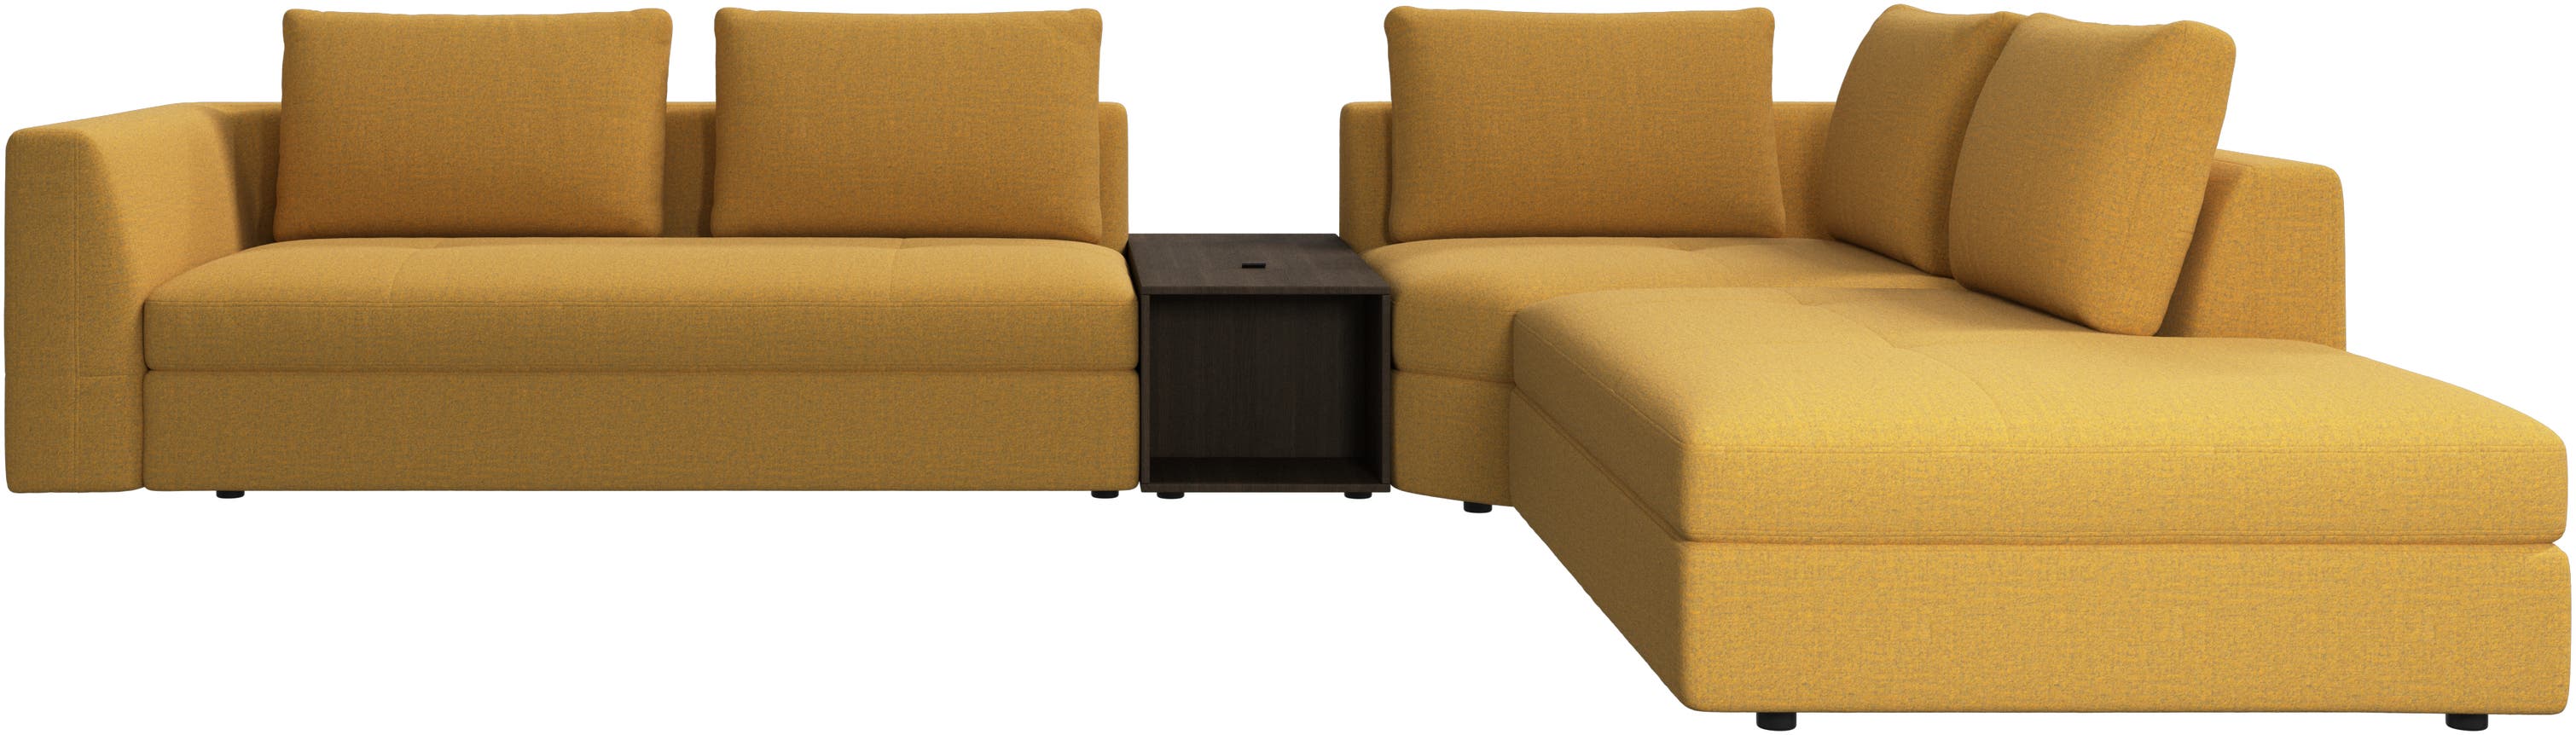 Bergamo corner sofa with lounging unit and footstool w/storage